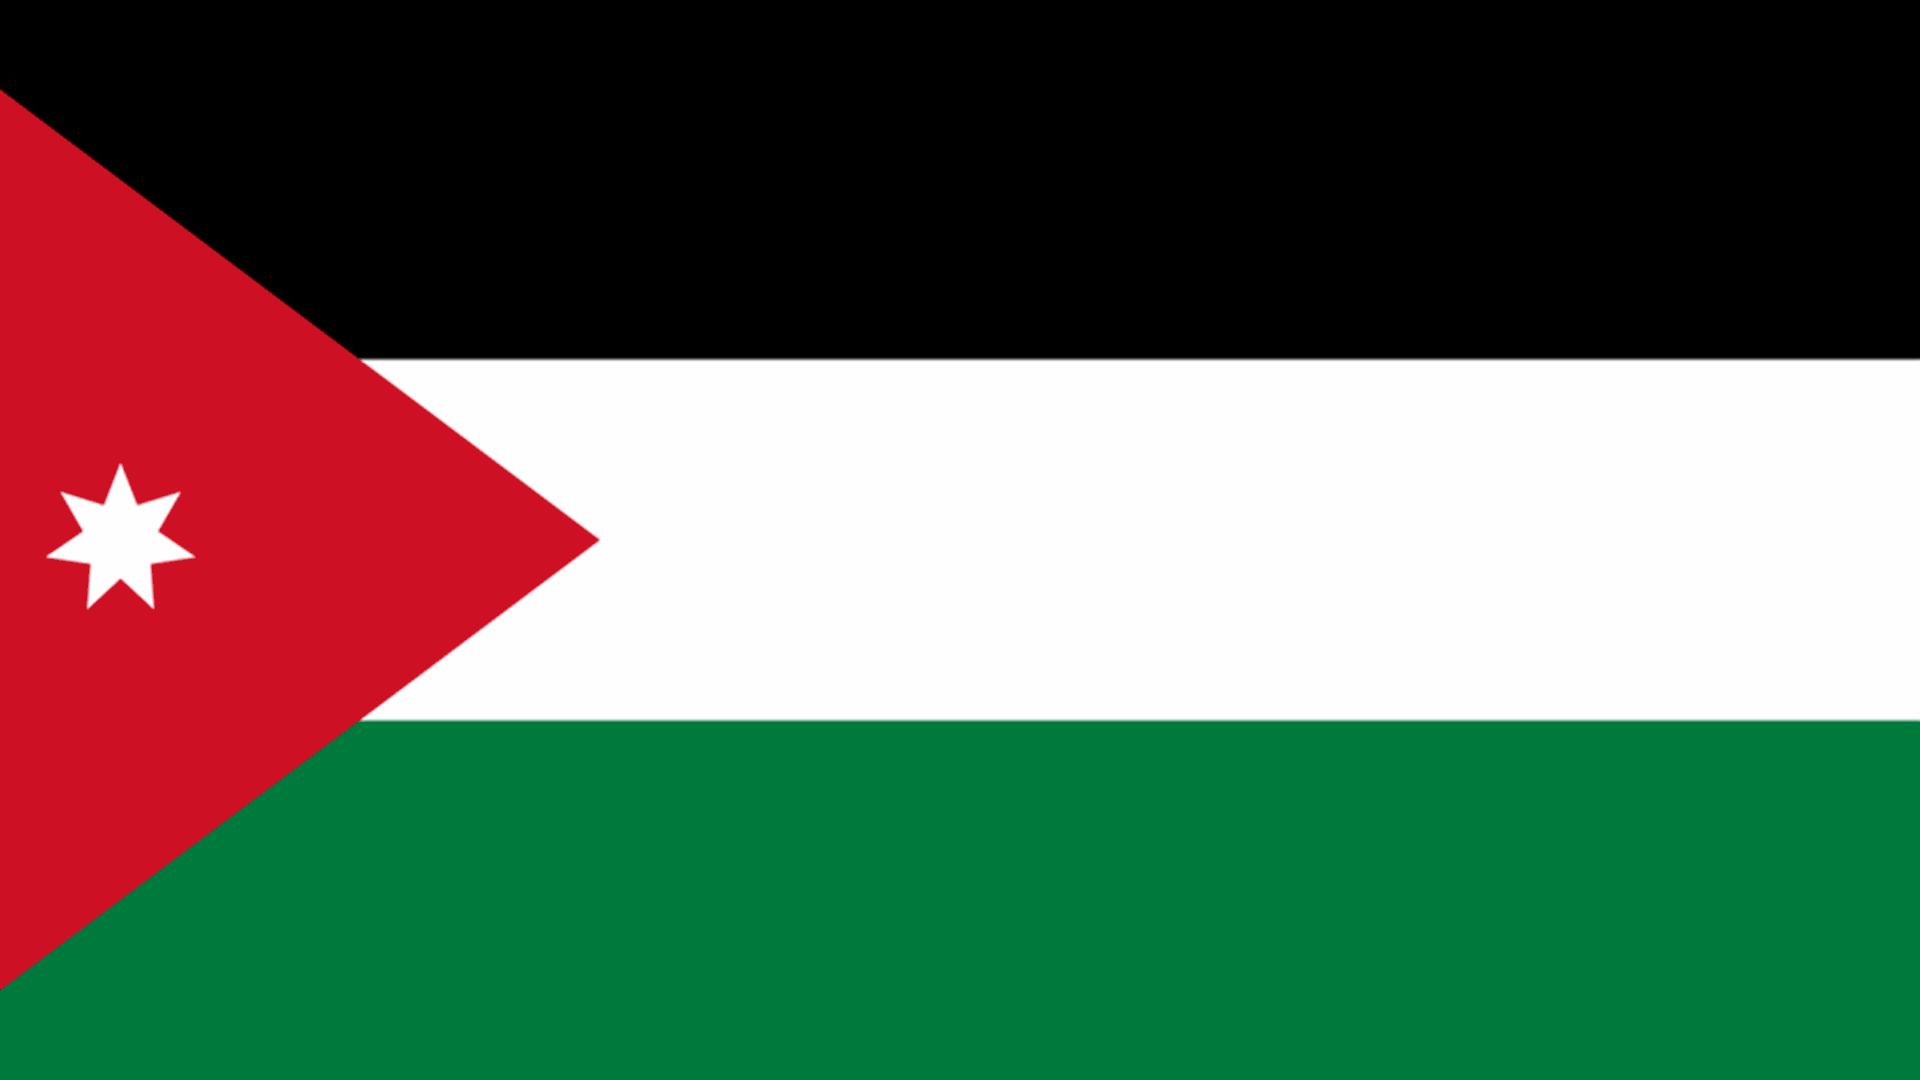 Jordan needs international help over refugee crisis-King Abdullah